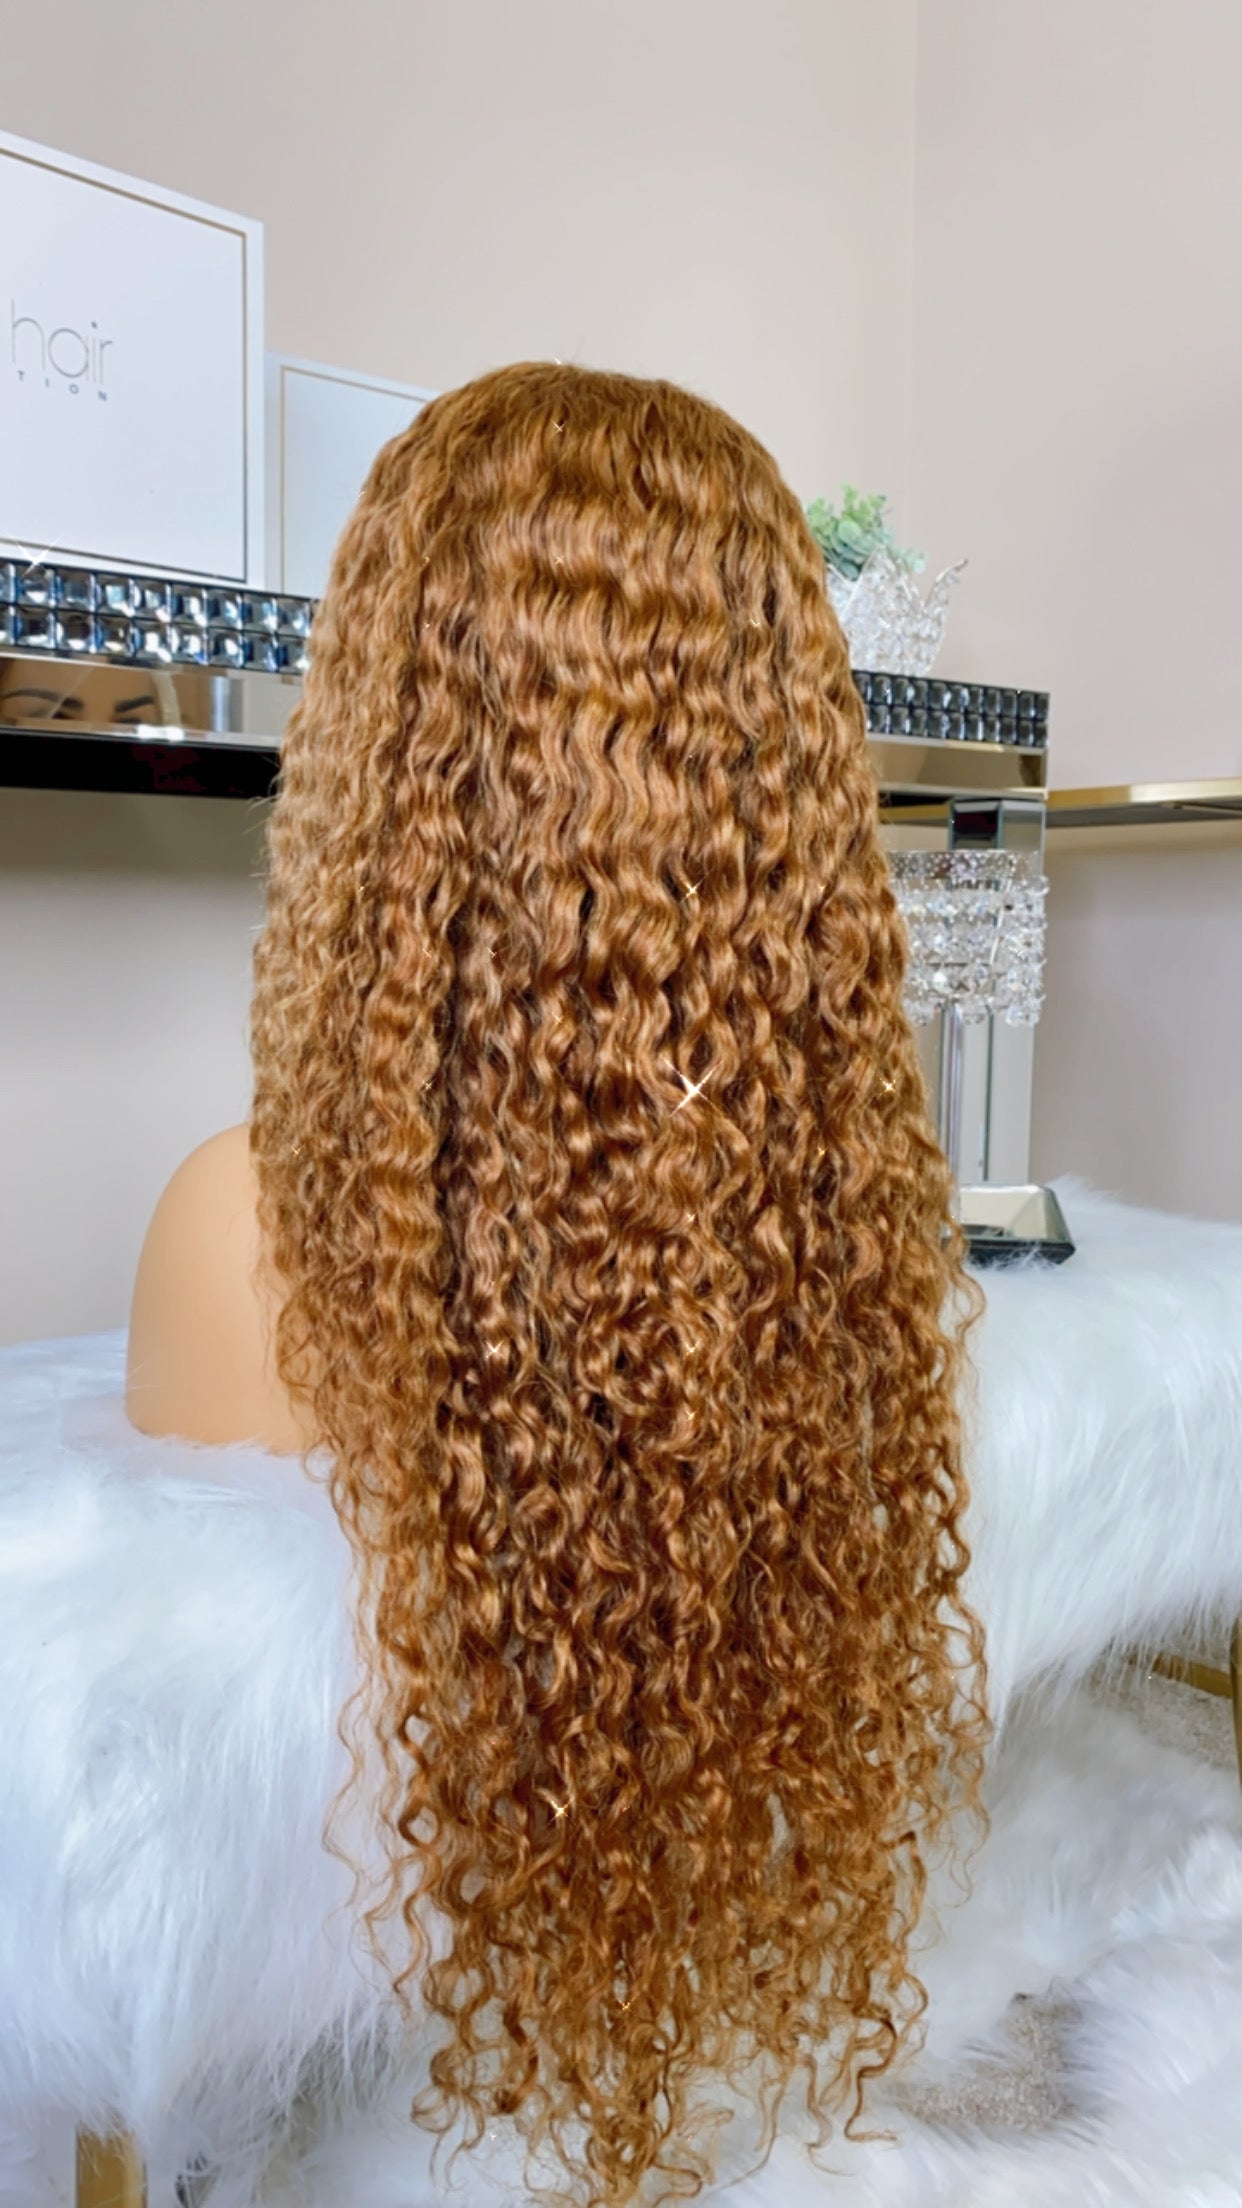 Marina - Sana hair collection